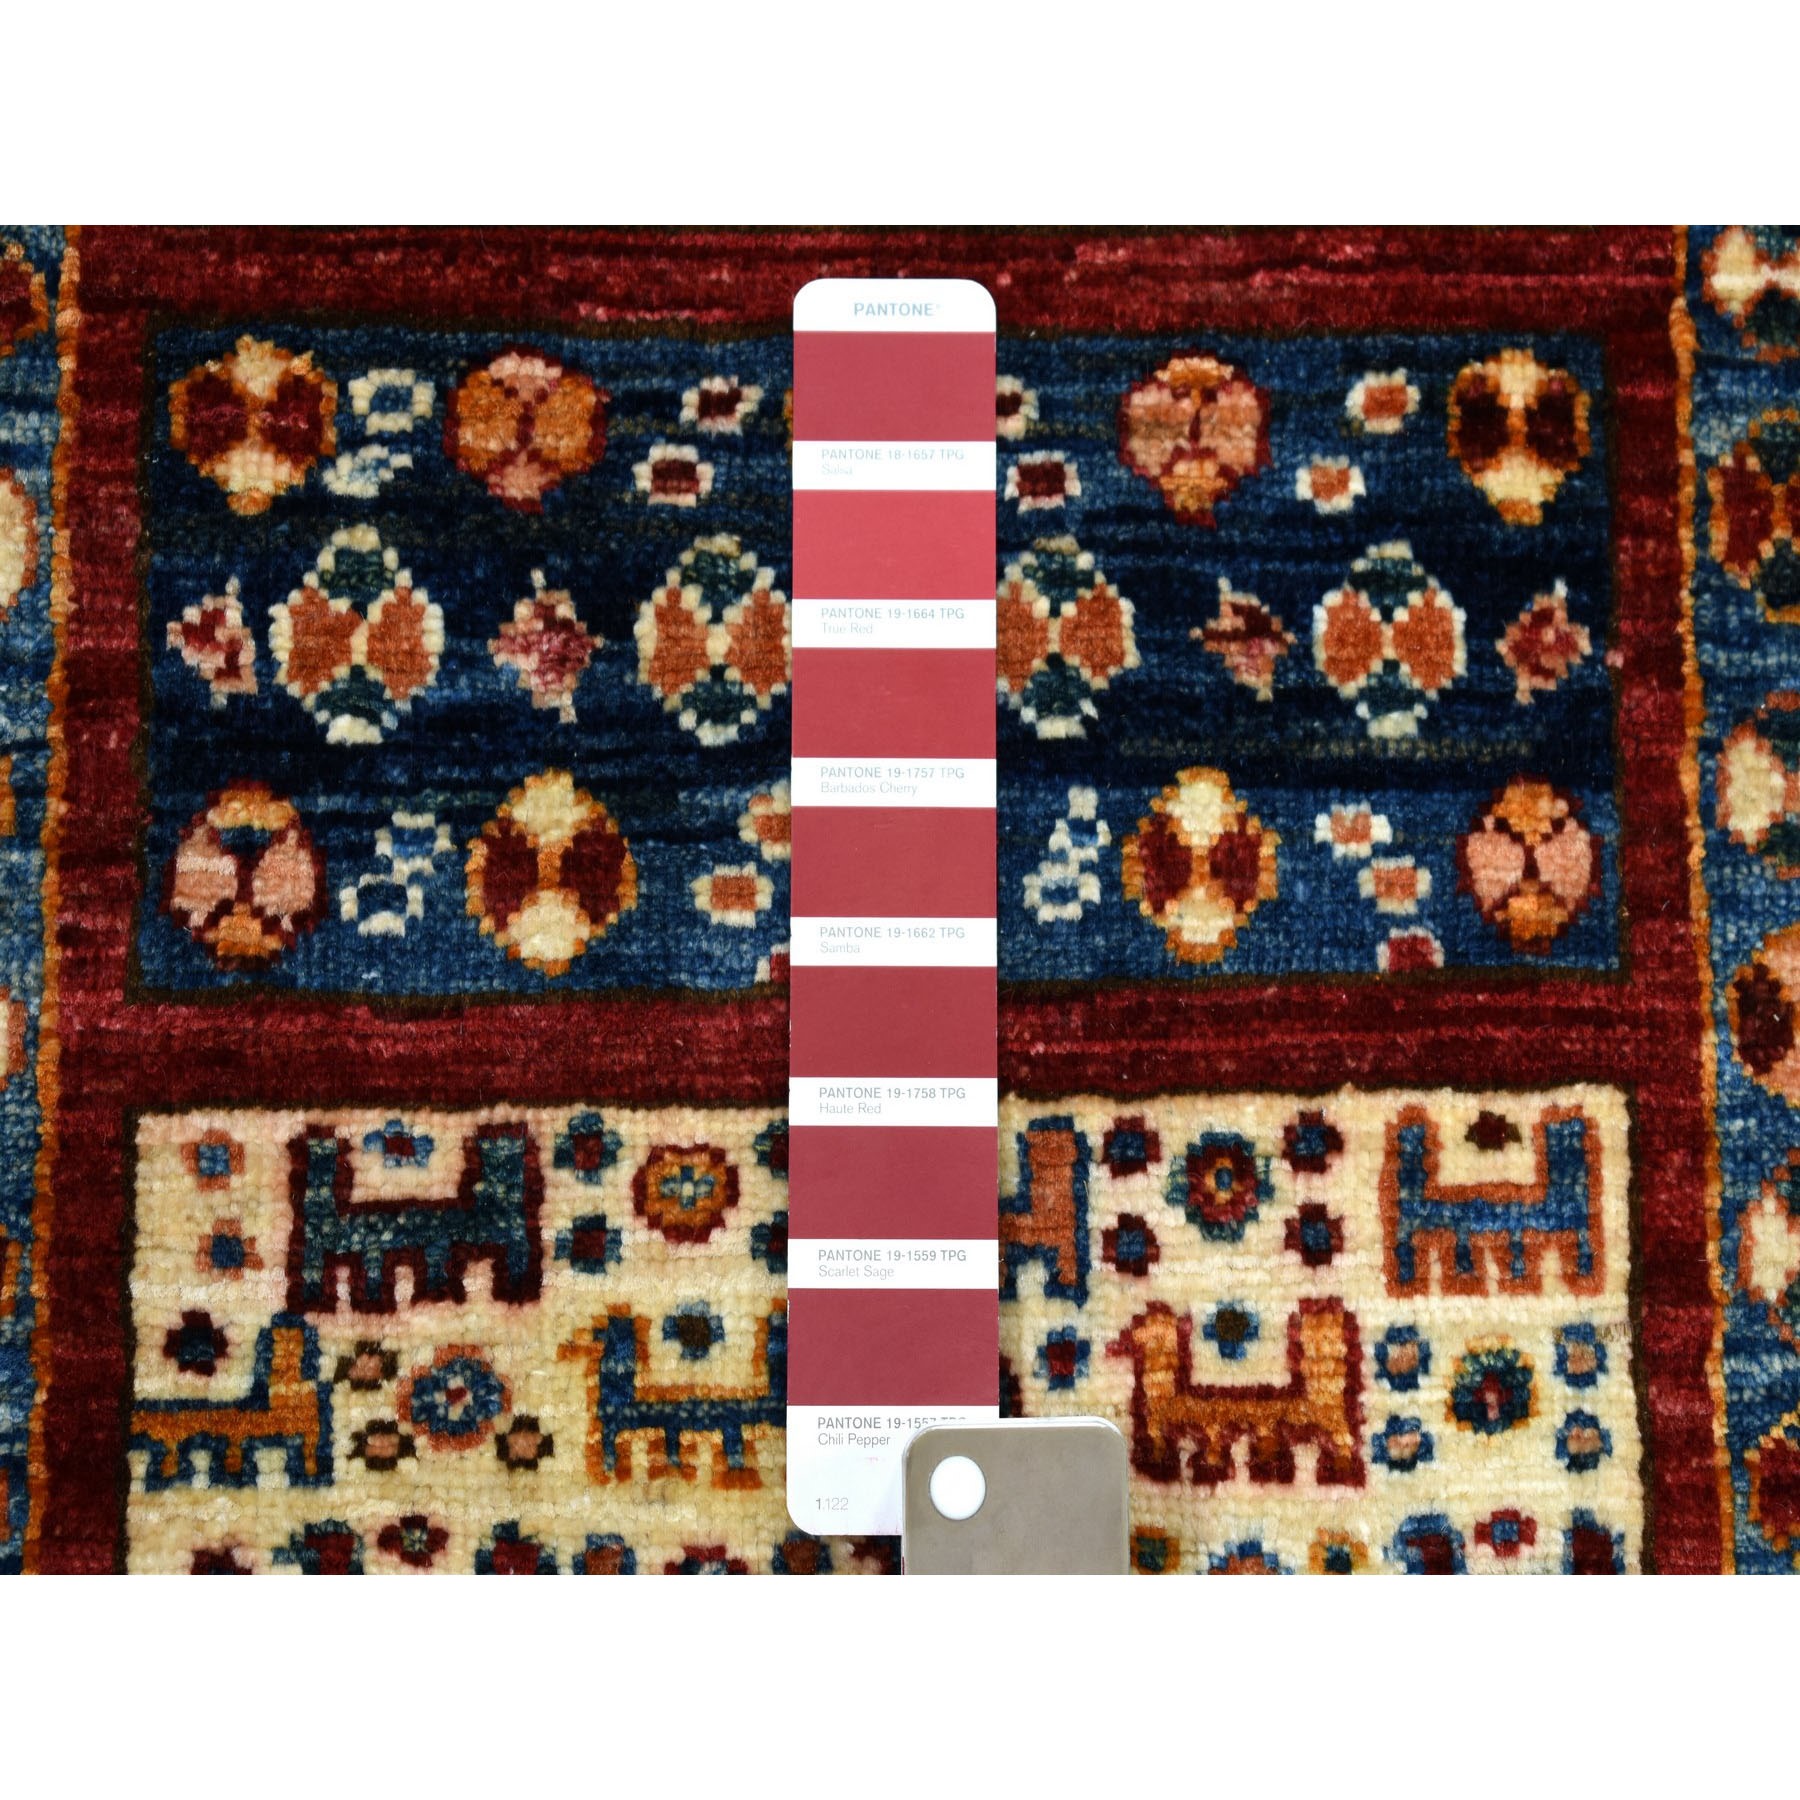 2'8"x10' Khorjin Design Colorful Runner Super Kazak Pure Wool Hand Woven Oriental Rug 